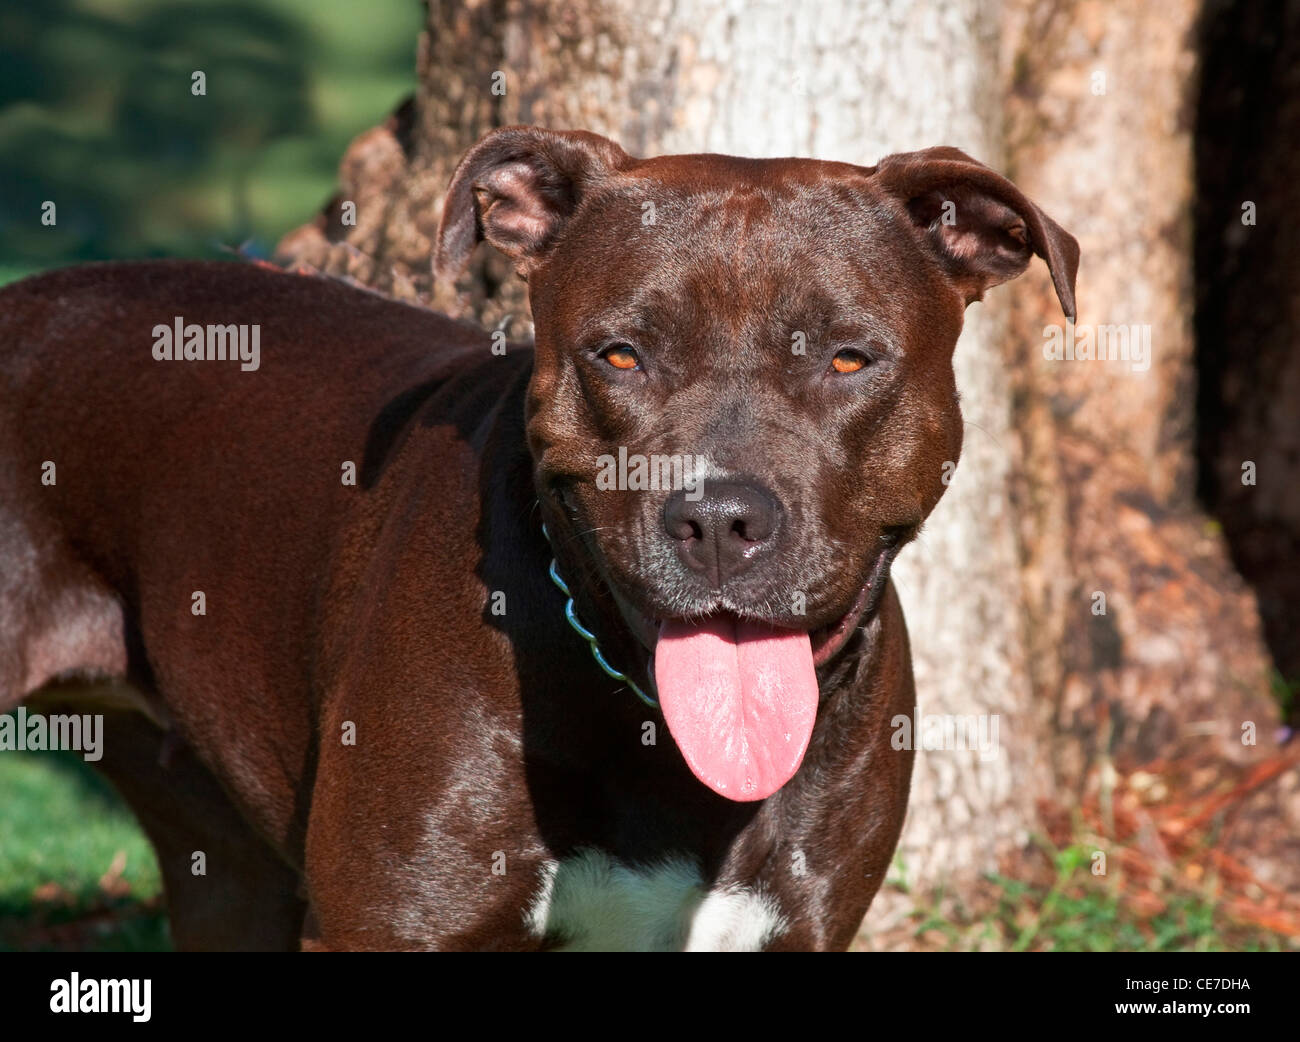 An American Pitt Bull Terrier standing in a park Stock Photo